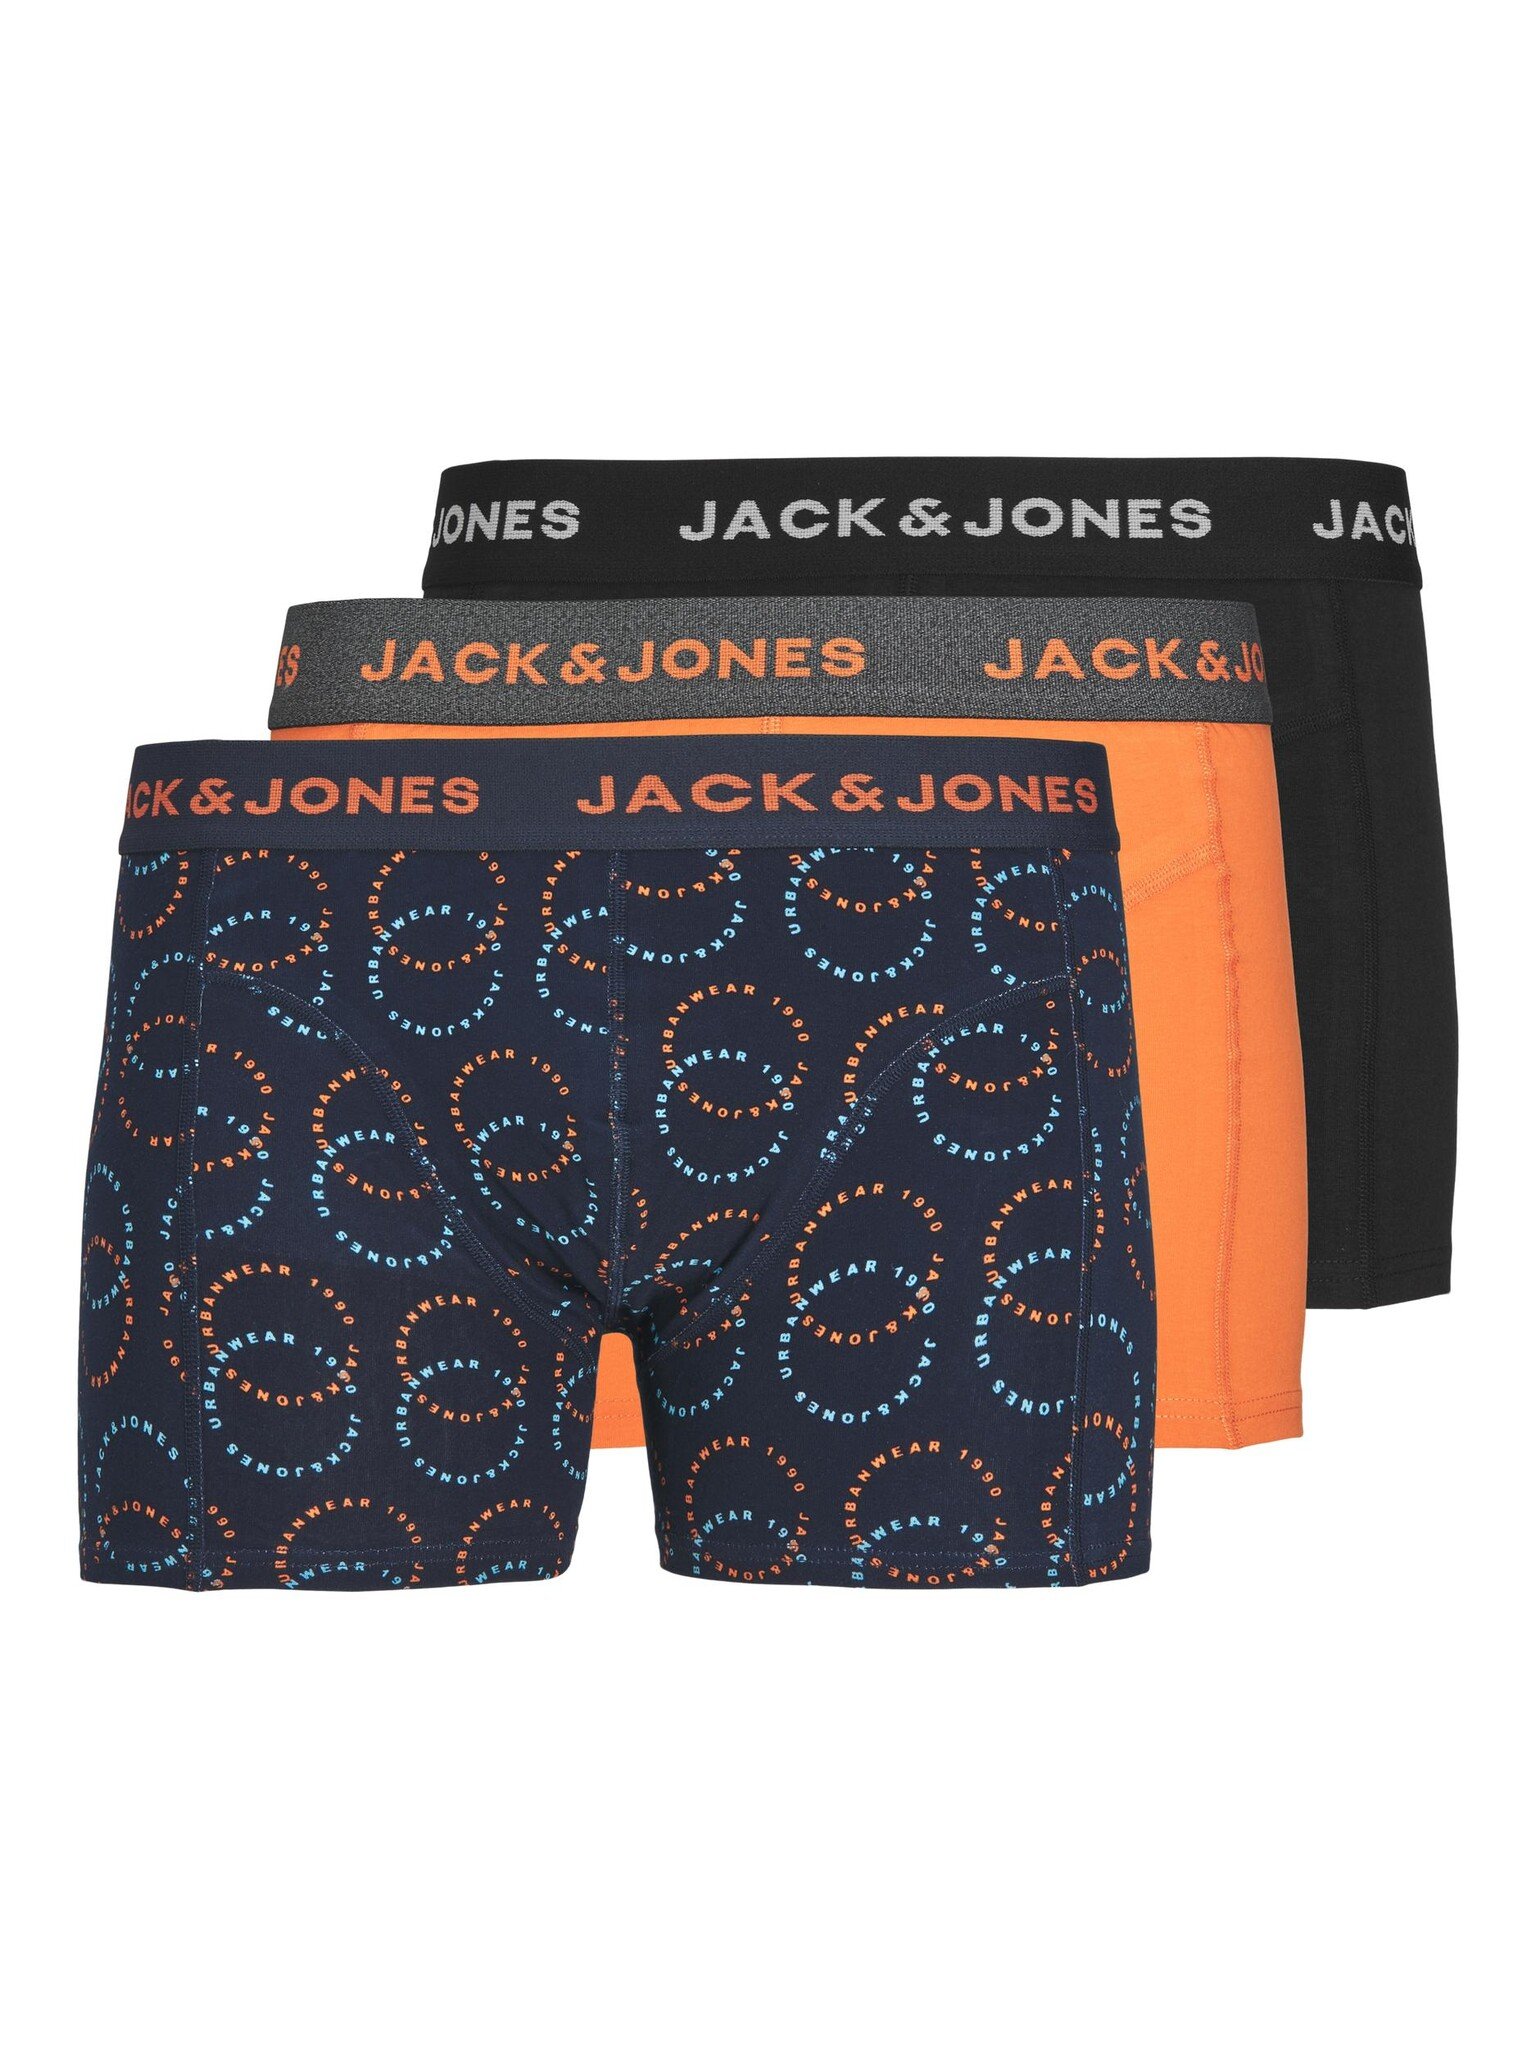 Jack Jones Jack Jones Heren Boxershorts Trunks JACLOGO CIRCLE Oranje Donkerblauw Zwart 3 Pack